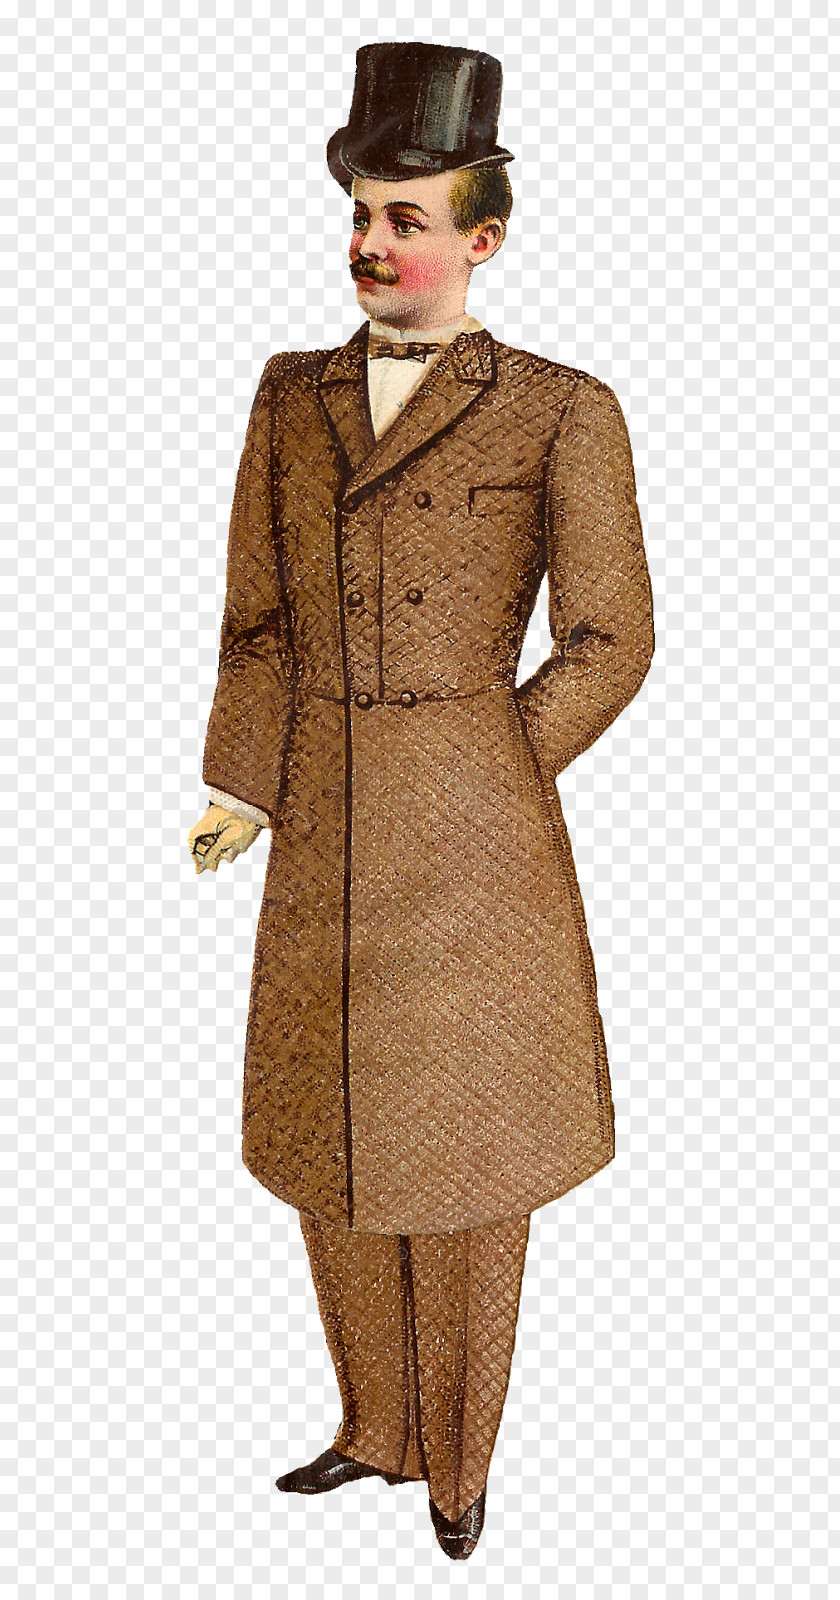 Stylish Man Victorian Era Suit Clothing Tuxedo Clip Art PNG